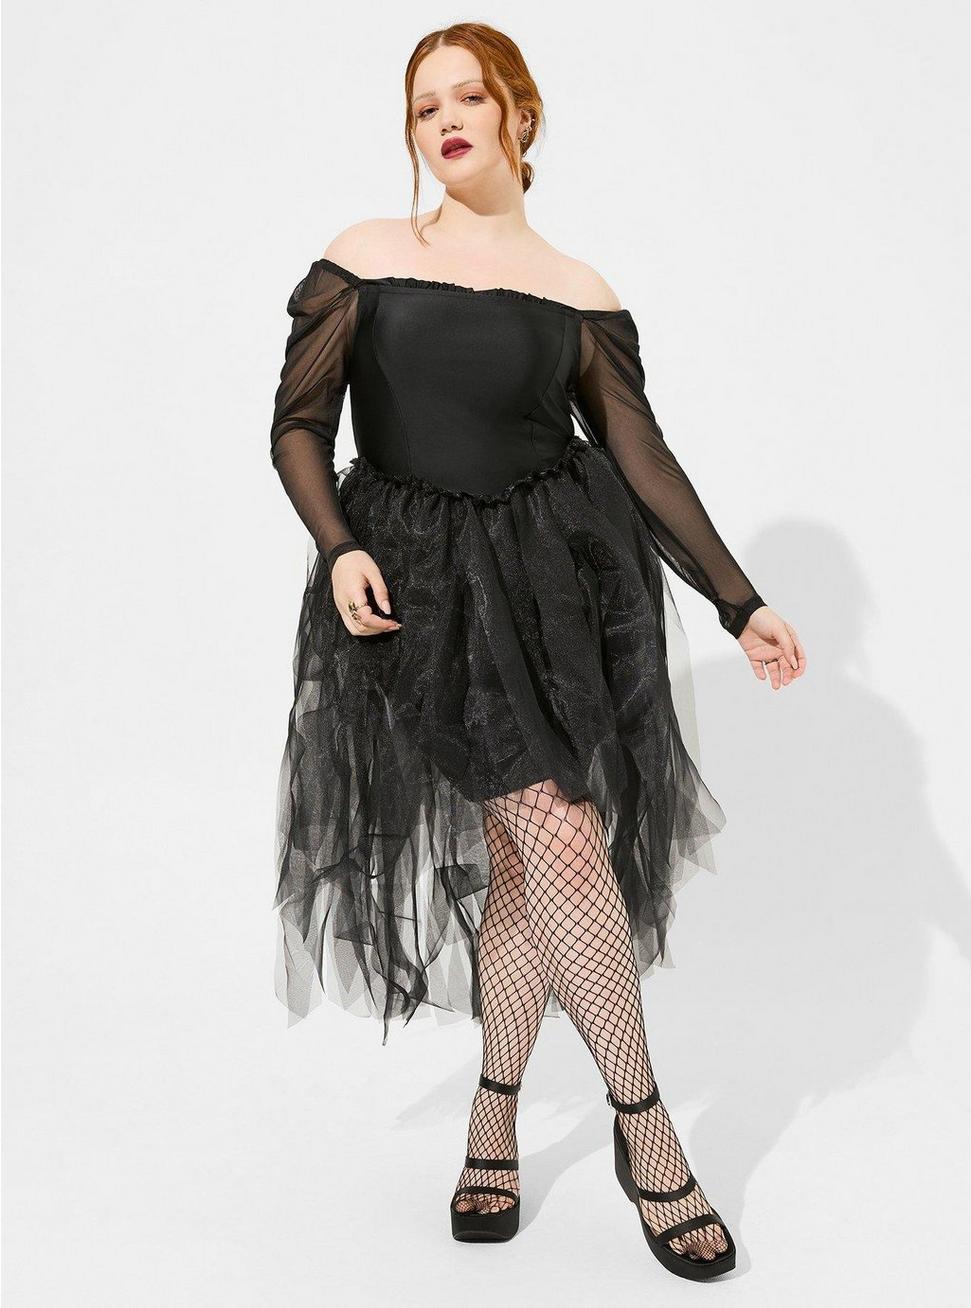 Plus Size Hi-Low Off Shoulder Black Dress, DEEP BLACK, hi-res